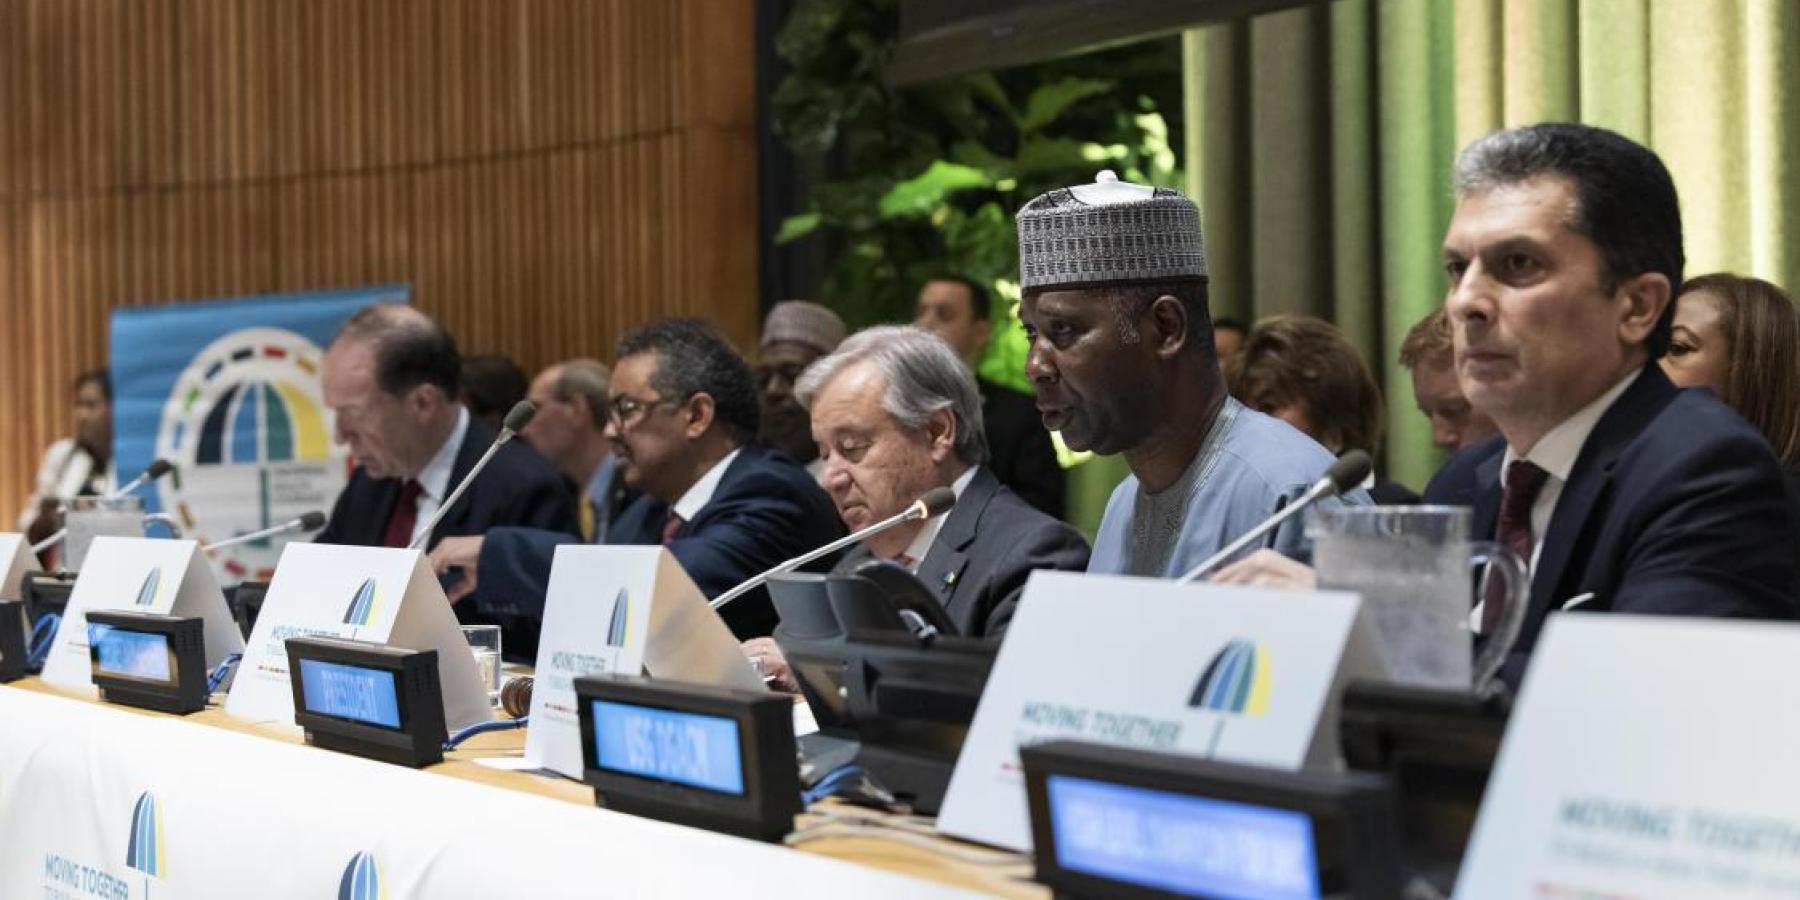 UN High-level Meeting on Universal Health Coverage, 23 September 2019, New York, US © UN Photo/Kim Haughton